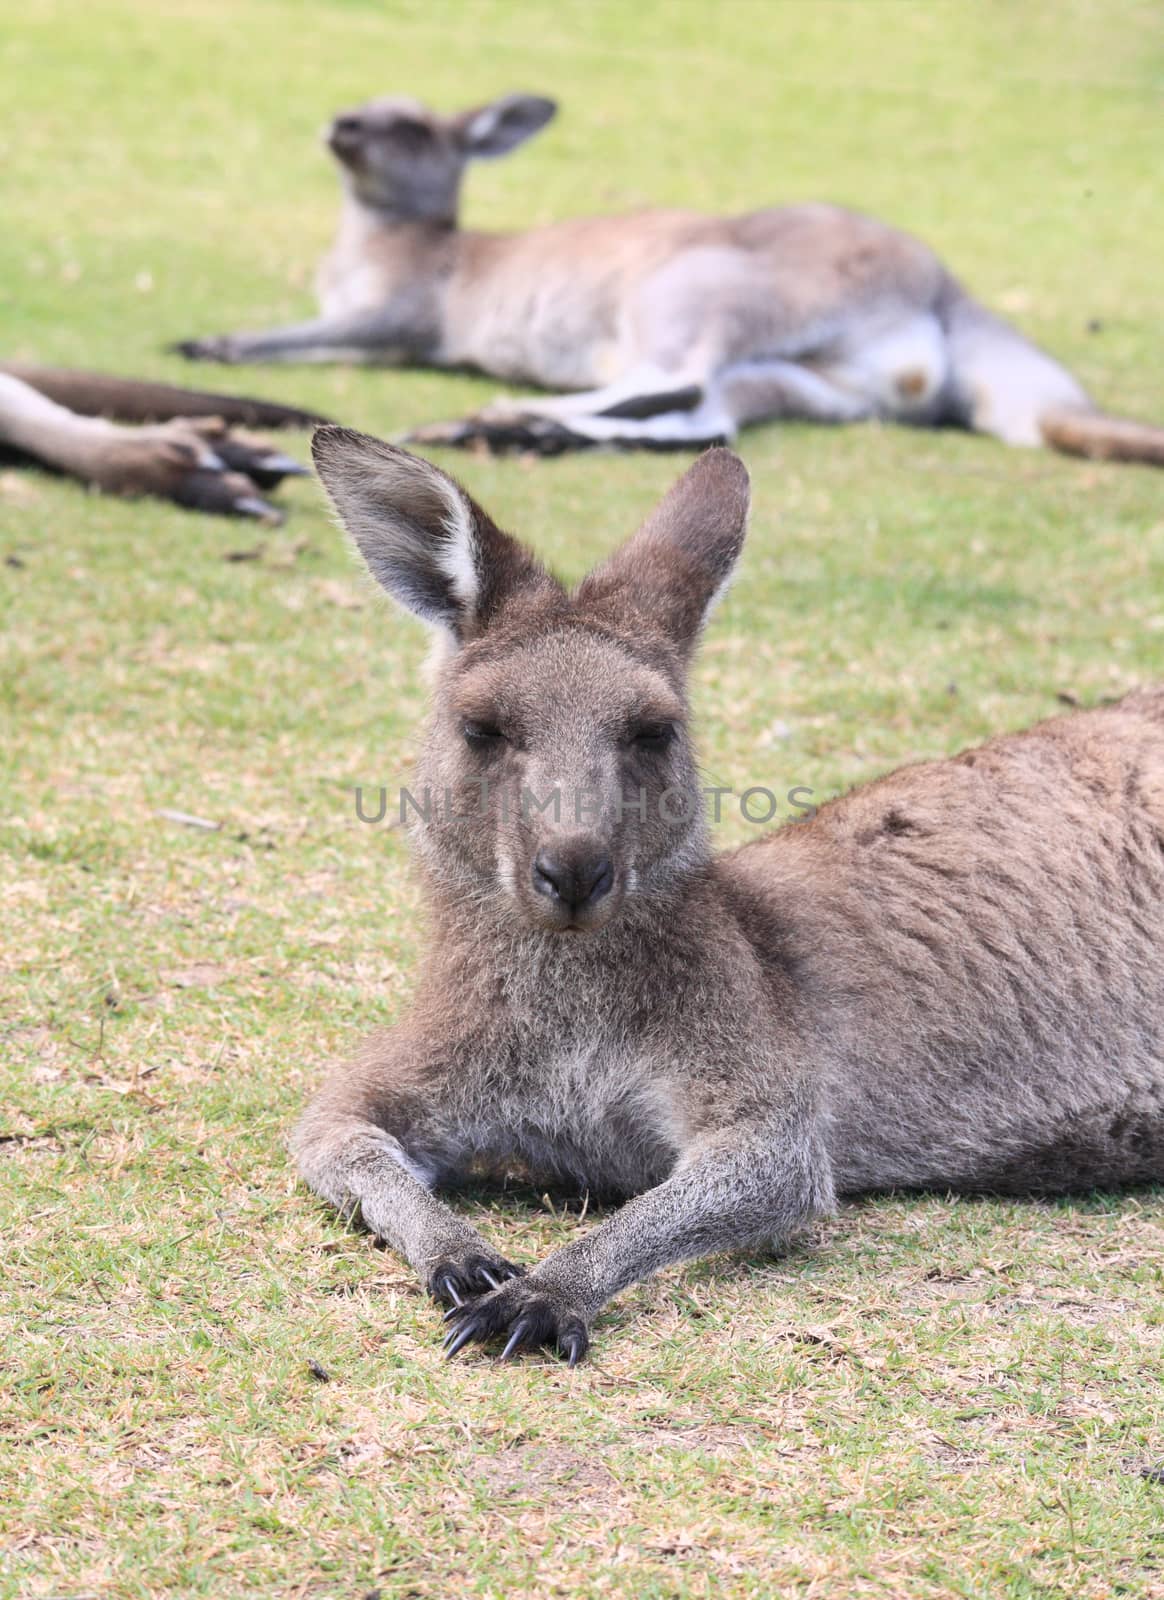 Kangaroos having an afternoon nap in a park